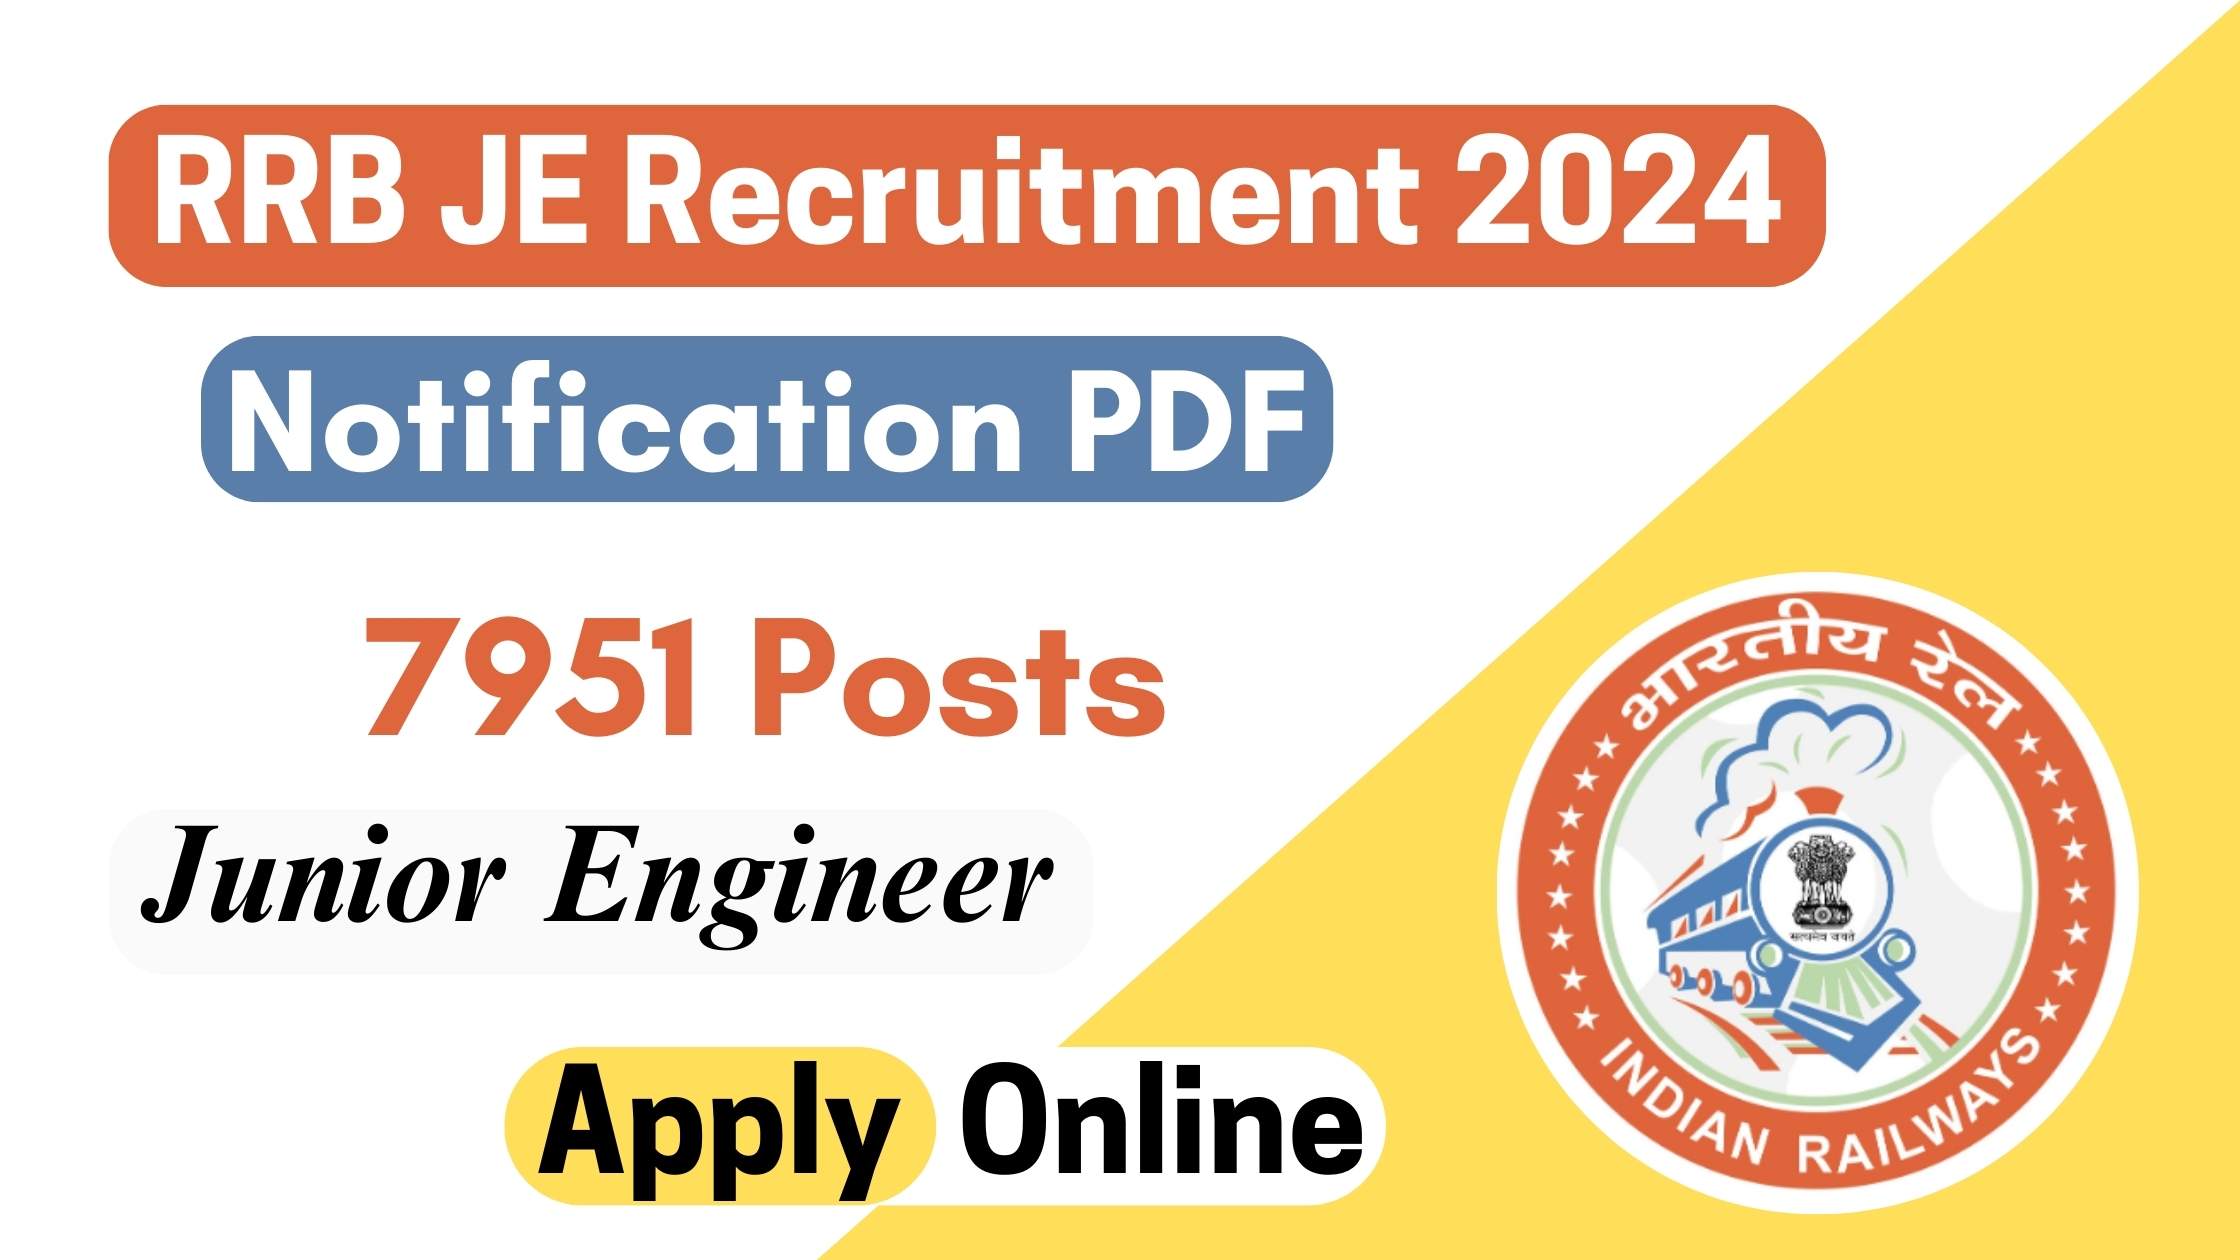 RRB JE Recruitment 2024